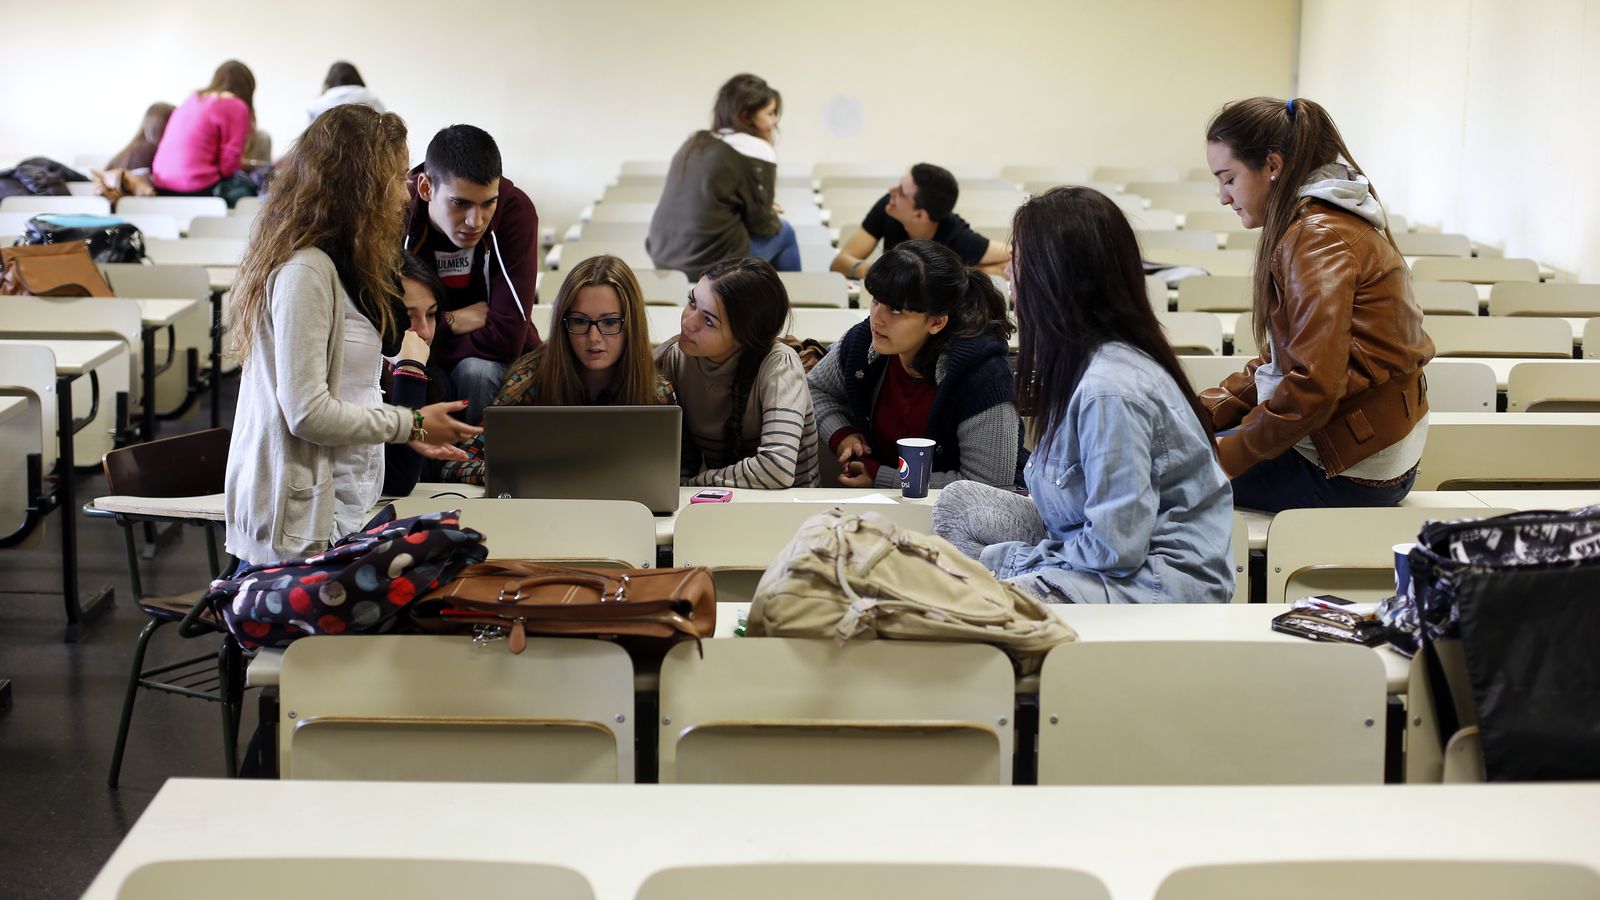 Foto: Estudiantes en la Universidad Complutense de Madrid. REUTERS/Susana Vera